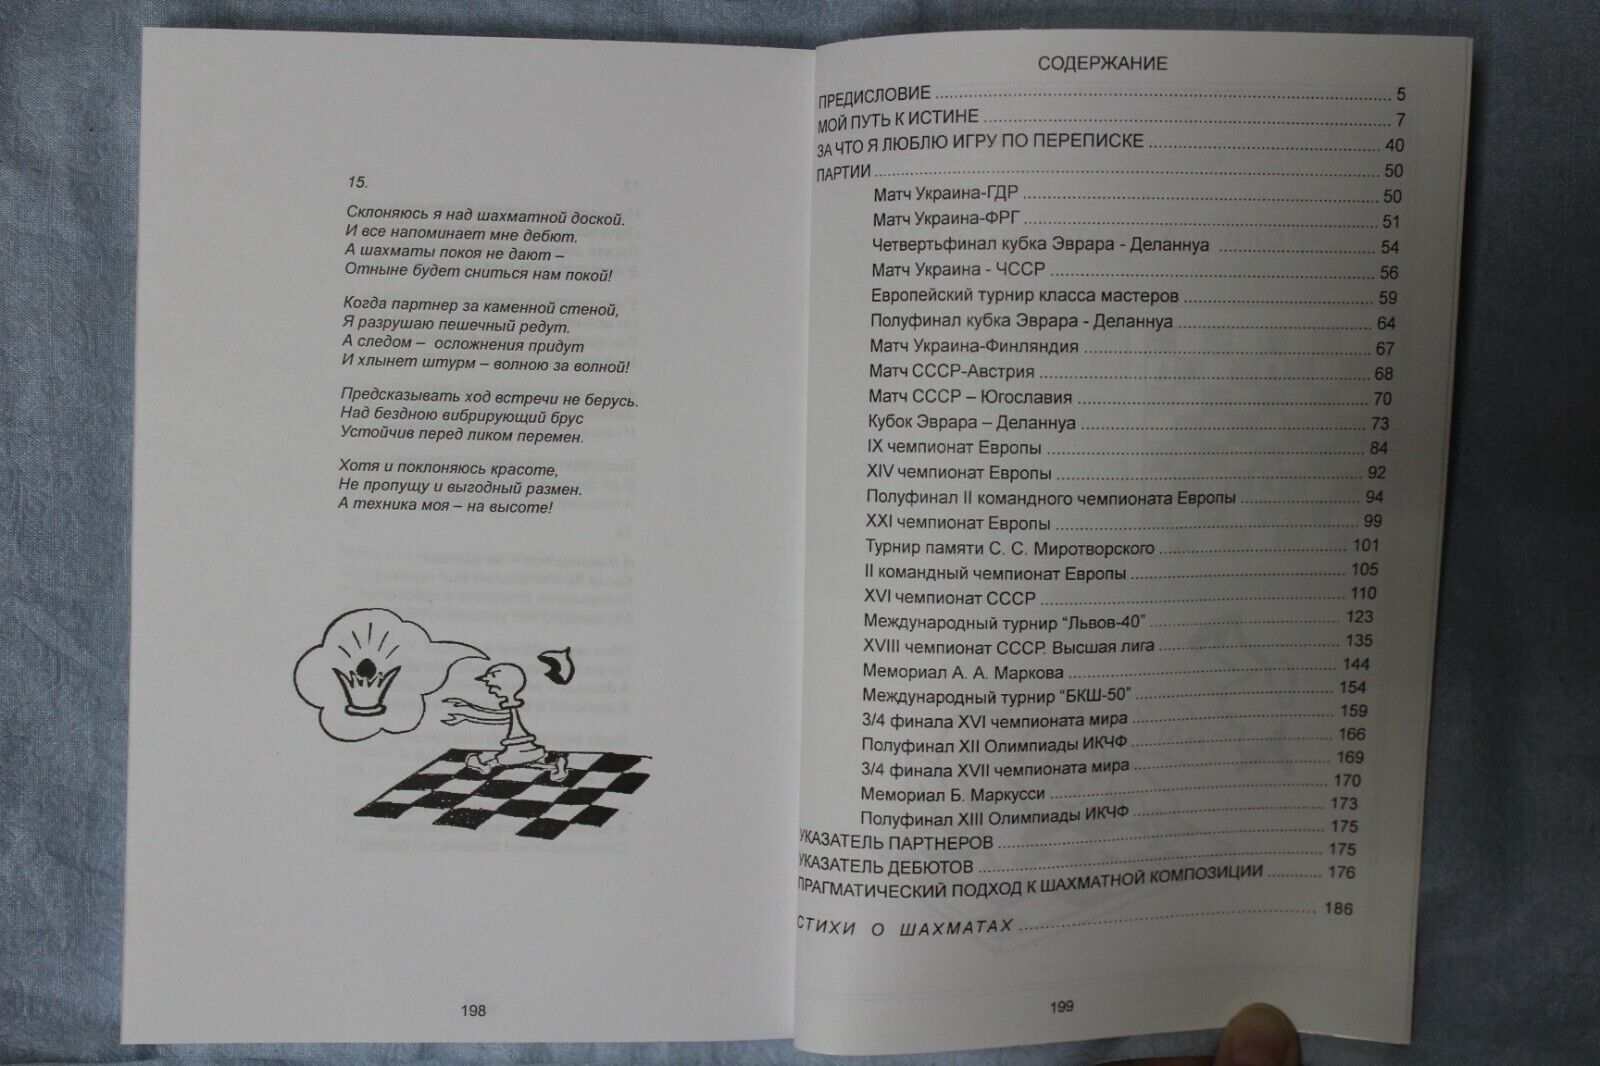 11516.Russian Chess Book: Grandmaster Secrets, 2000 A. Volchok